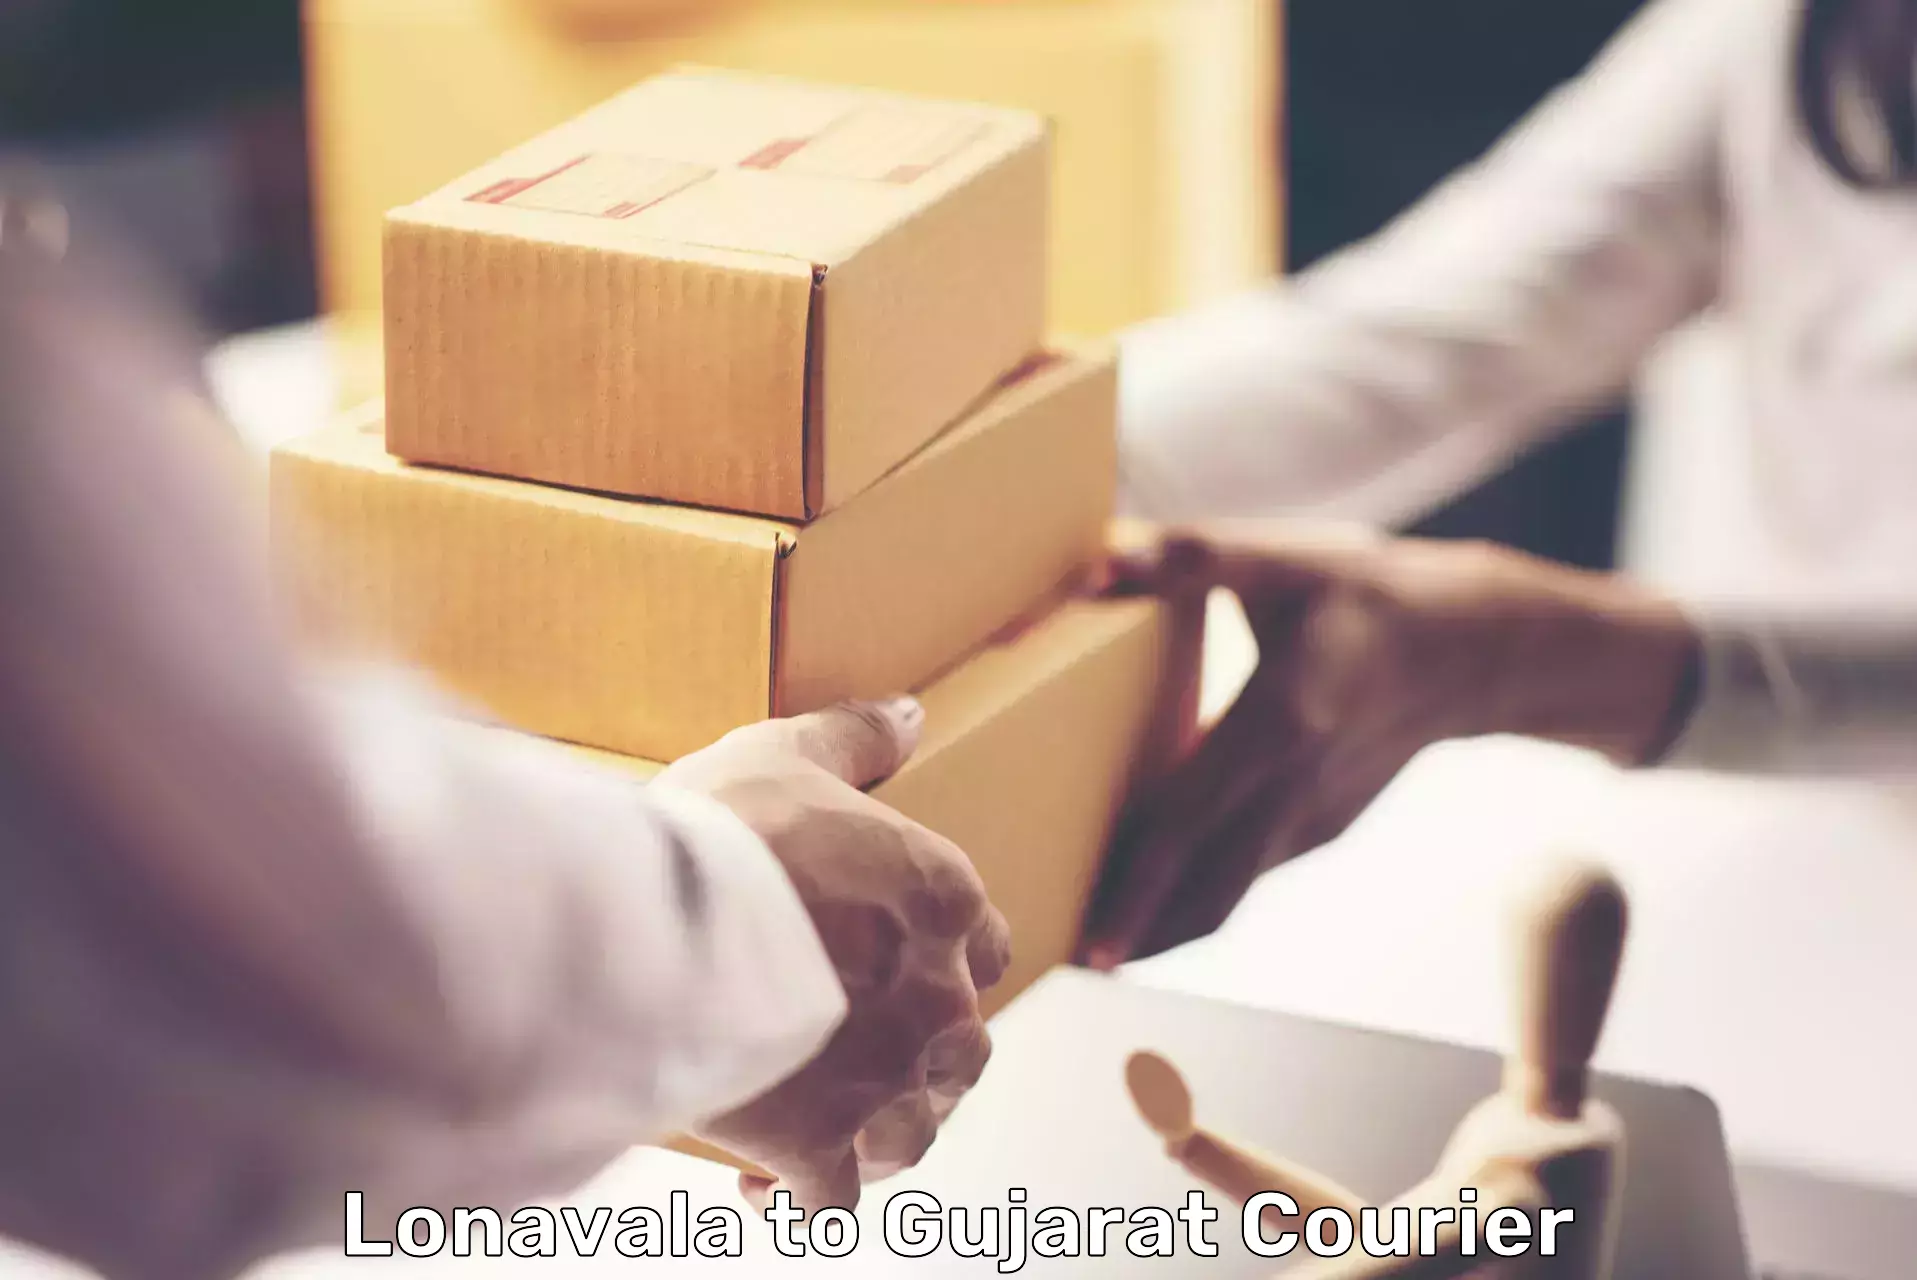 Cargo delivery service Lonavala to Ahmedabad